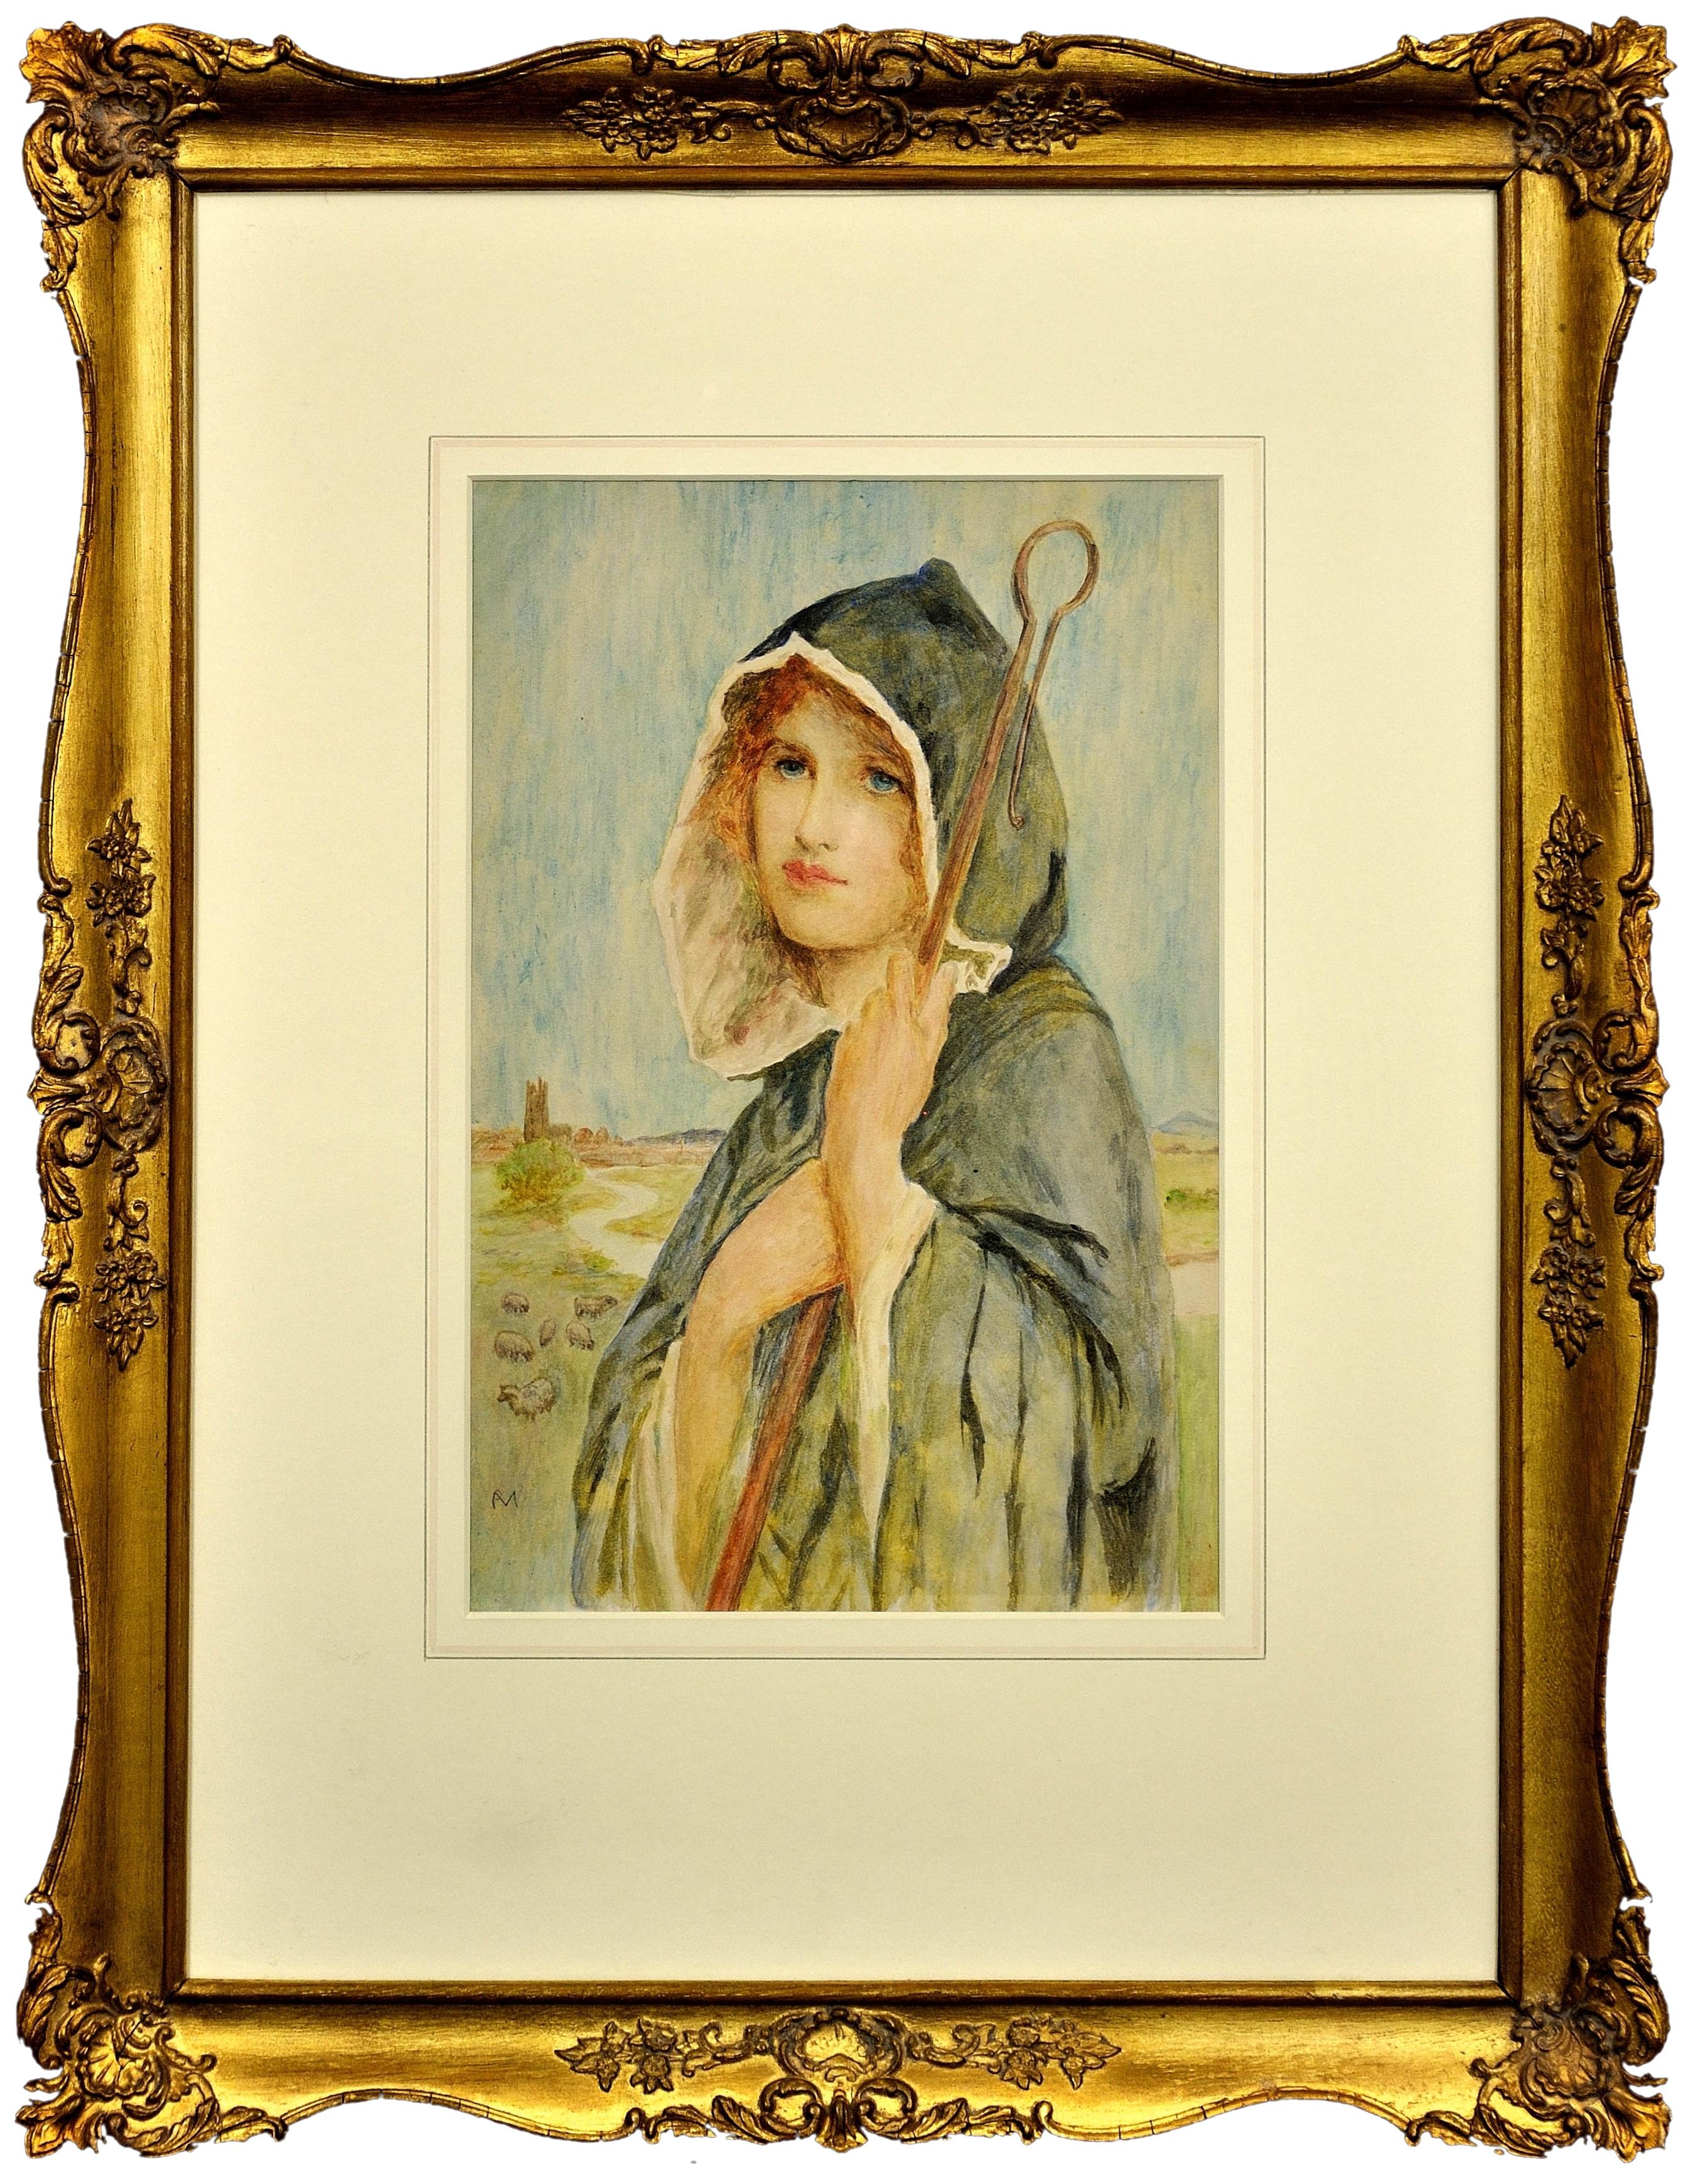 Philip Richard Morris Figurative Art - The Cloaked Shepherdess. Pre-Raphaelite. Arts and Crafts Aesthetics. Victorian.